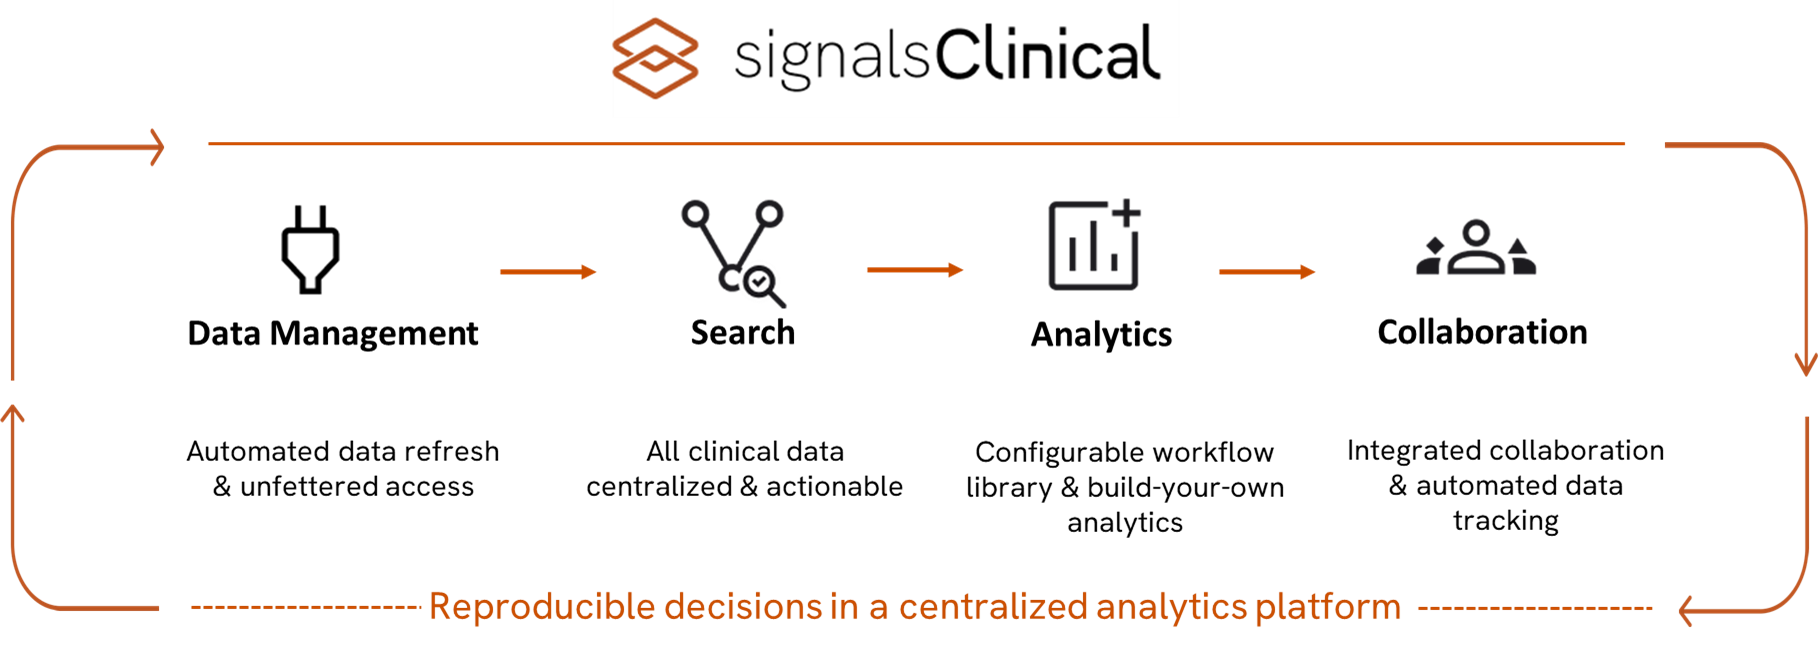 signals clinical decision workflow platform image